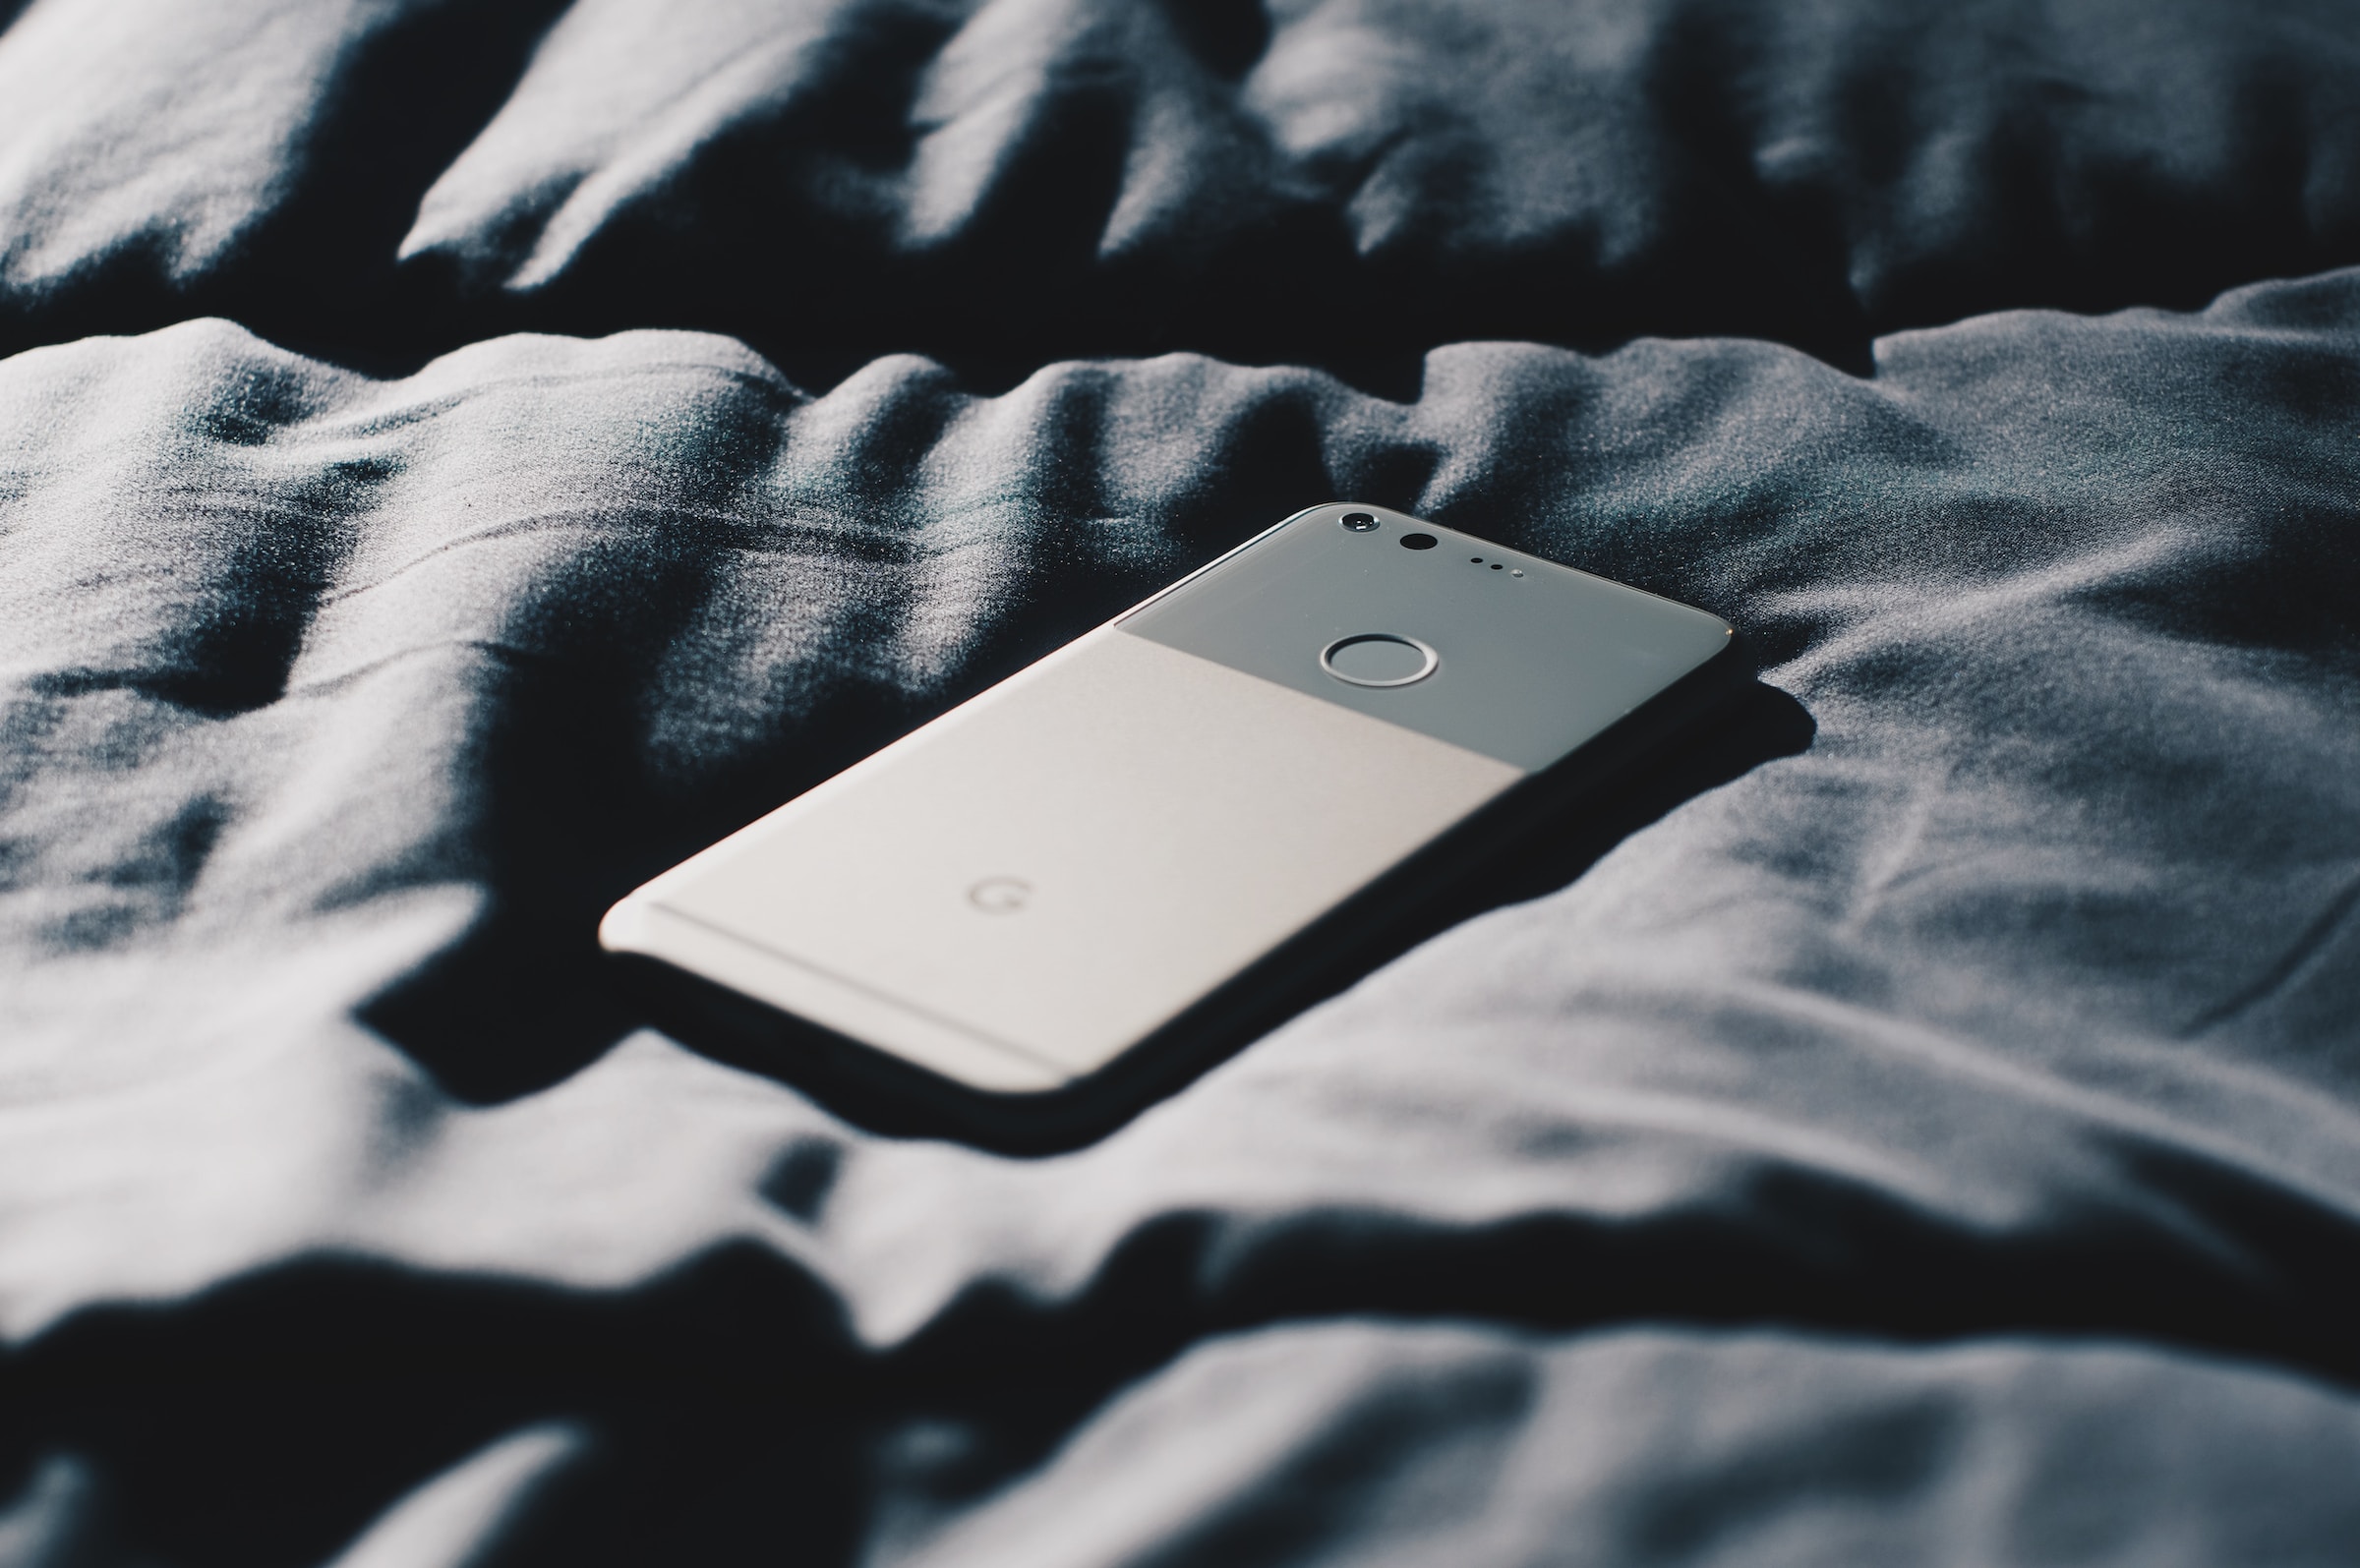 Phone on bed | Source: Pexels